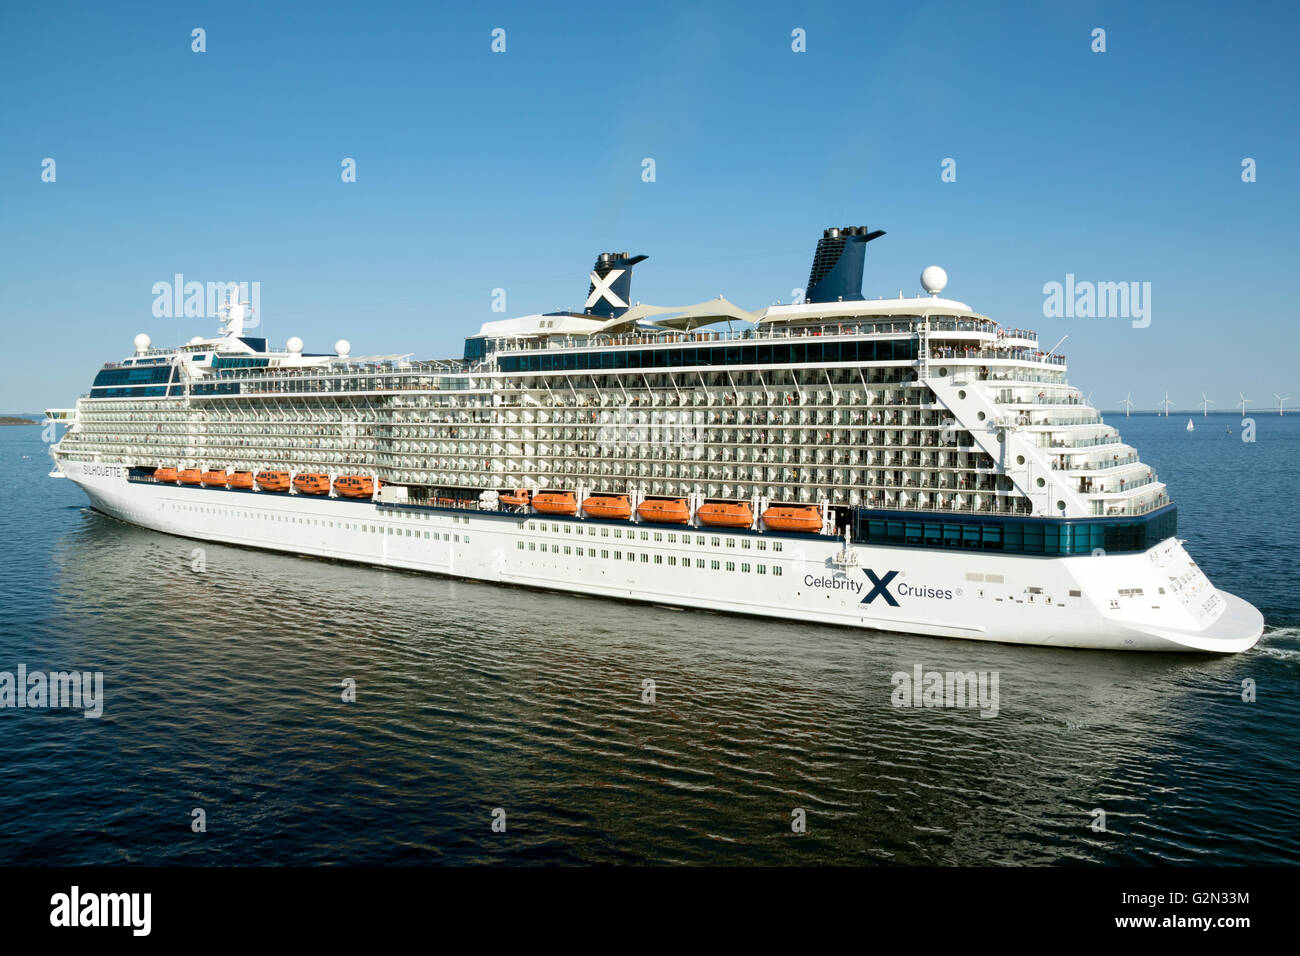 X Cruise Ship Cruise Gallery